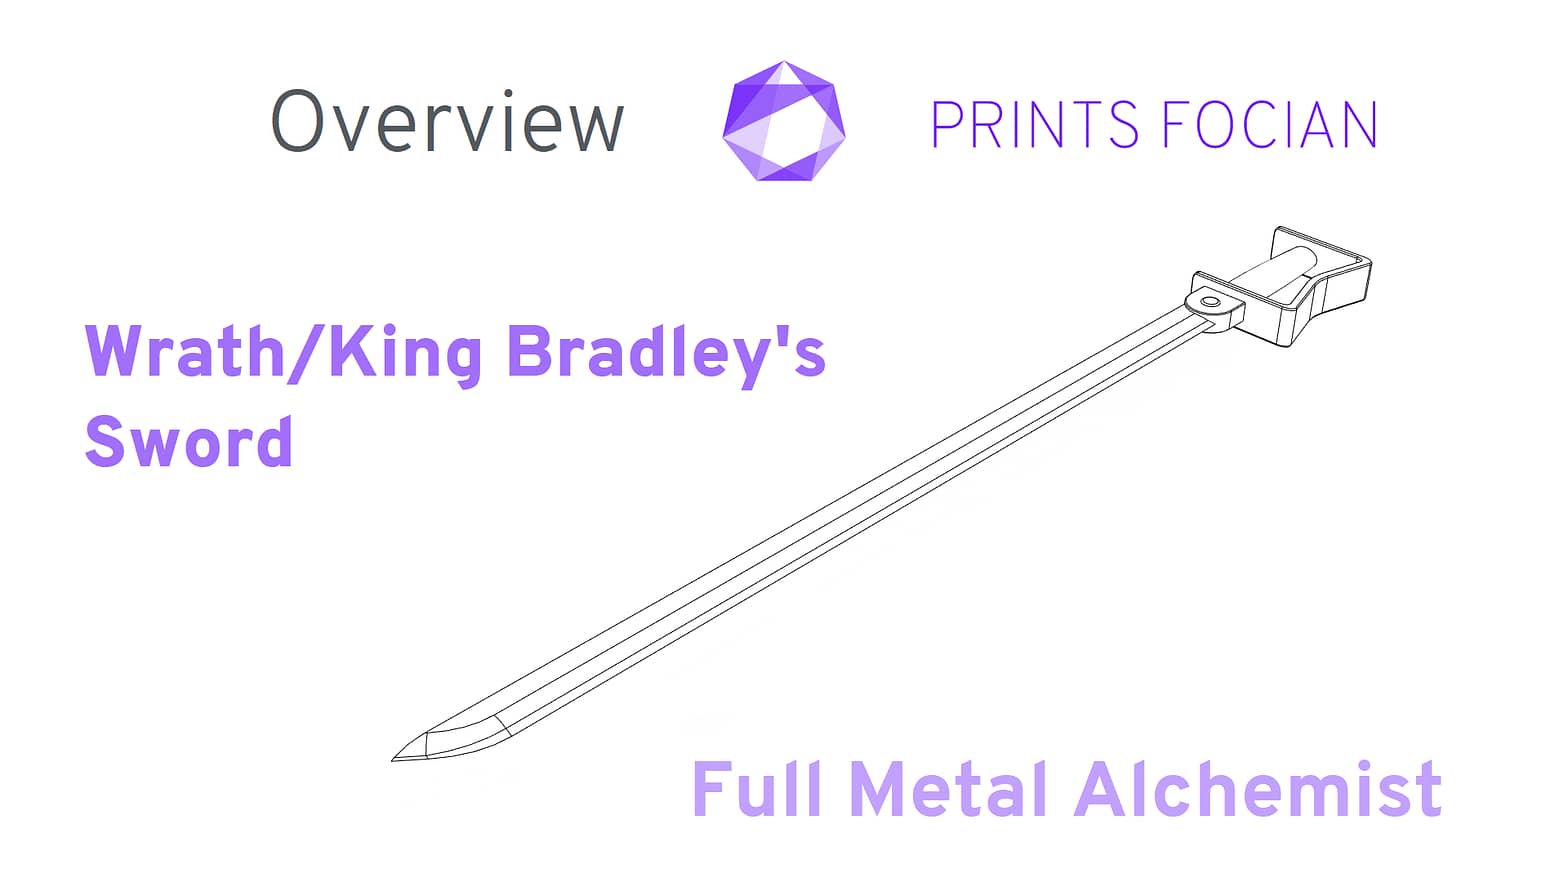 Text: Prints Focian, Overview, Wrath/King Bradley's Sword, Full Metal Alchemist. Image of the sword.